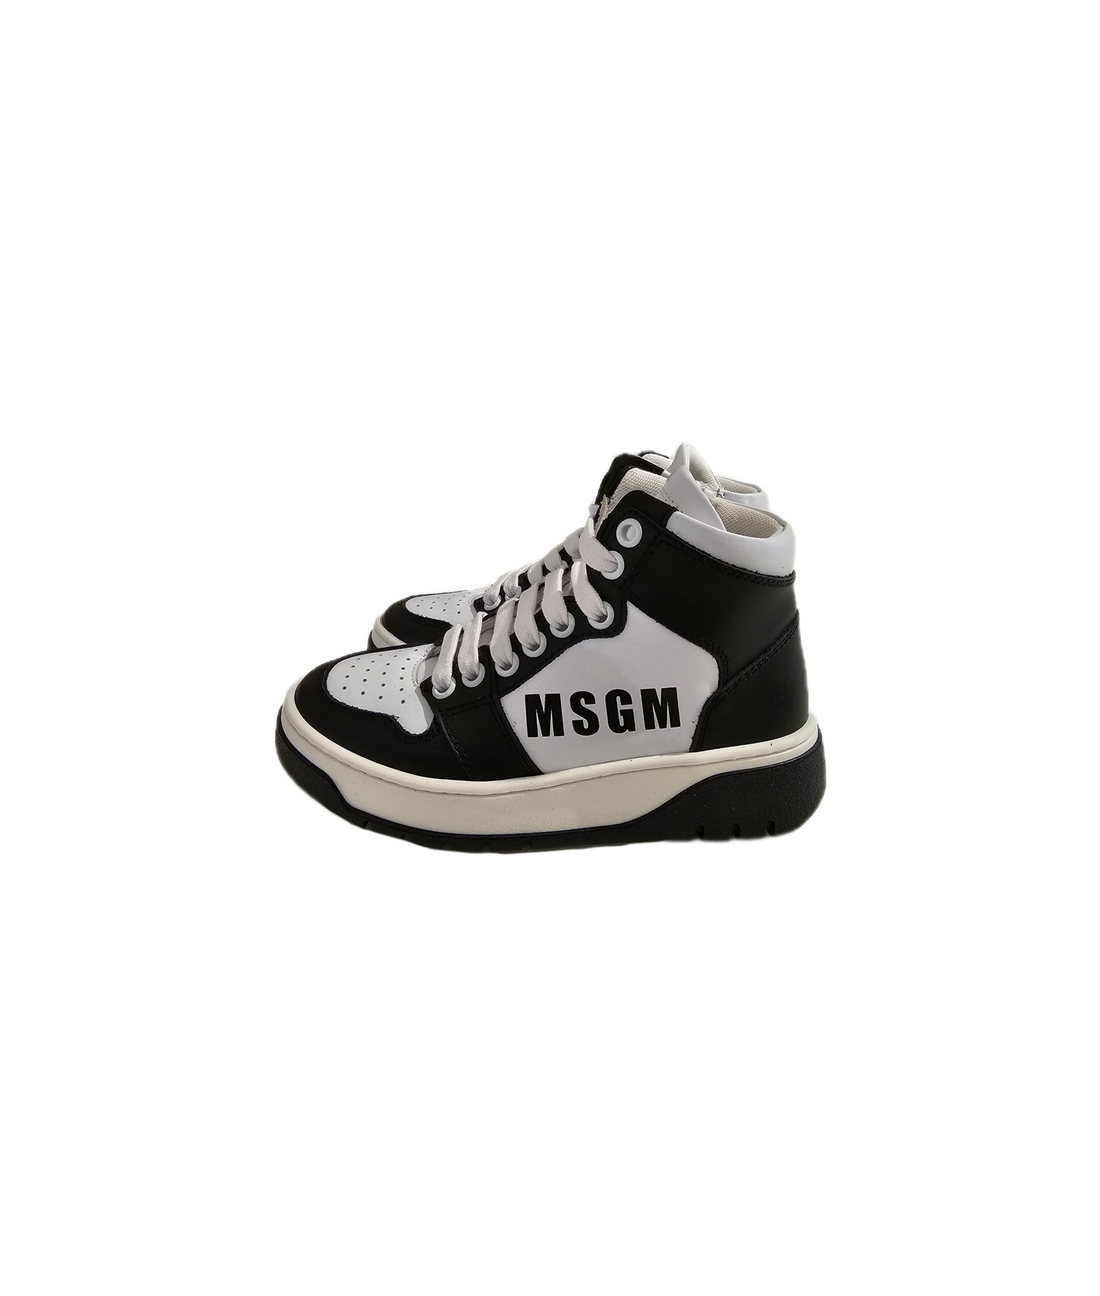 Sneakers skóra czarna łączona MSGM 123 4038 123/02c